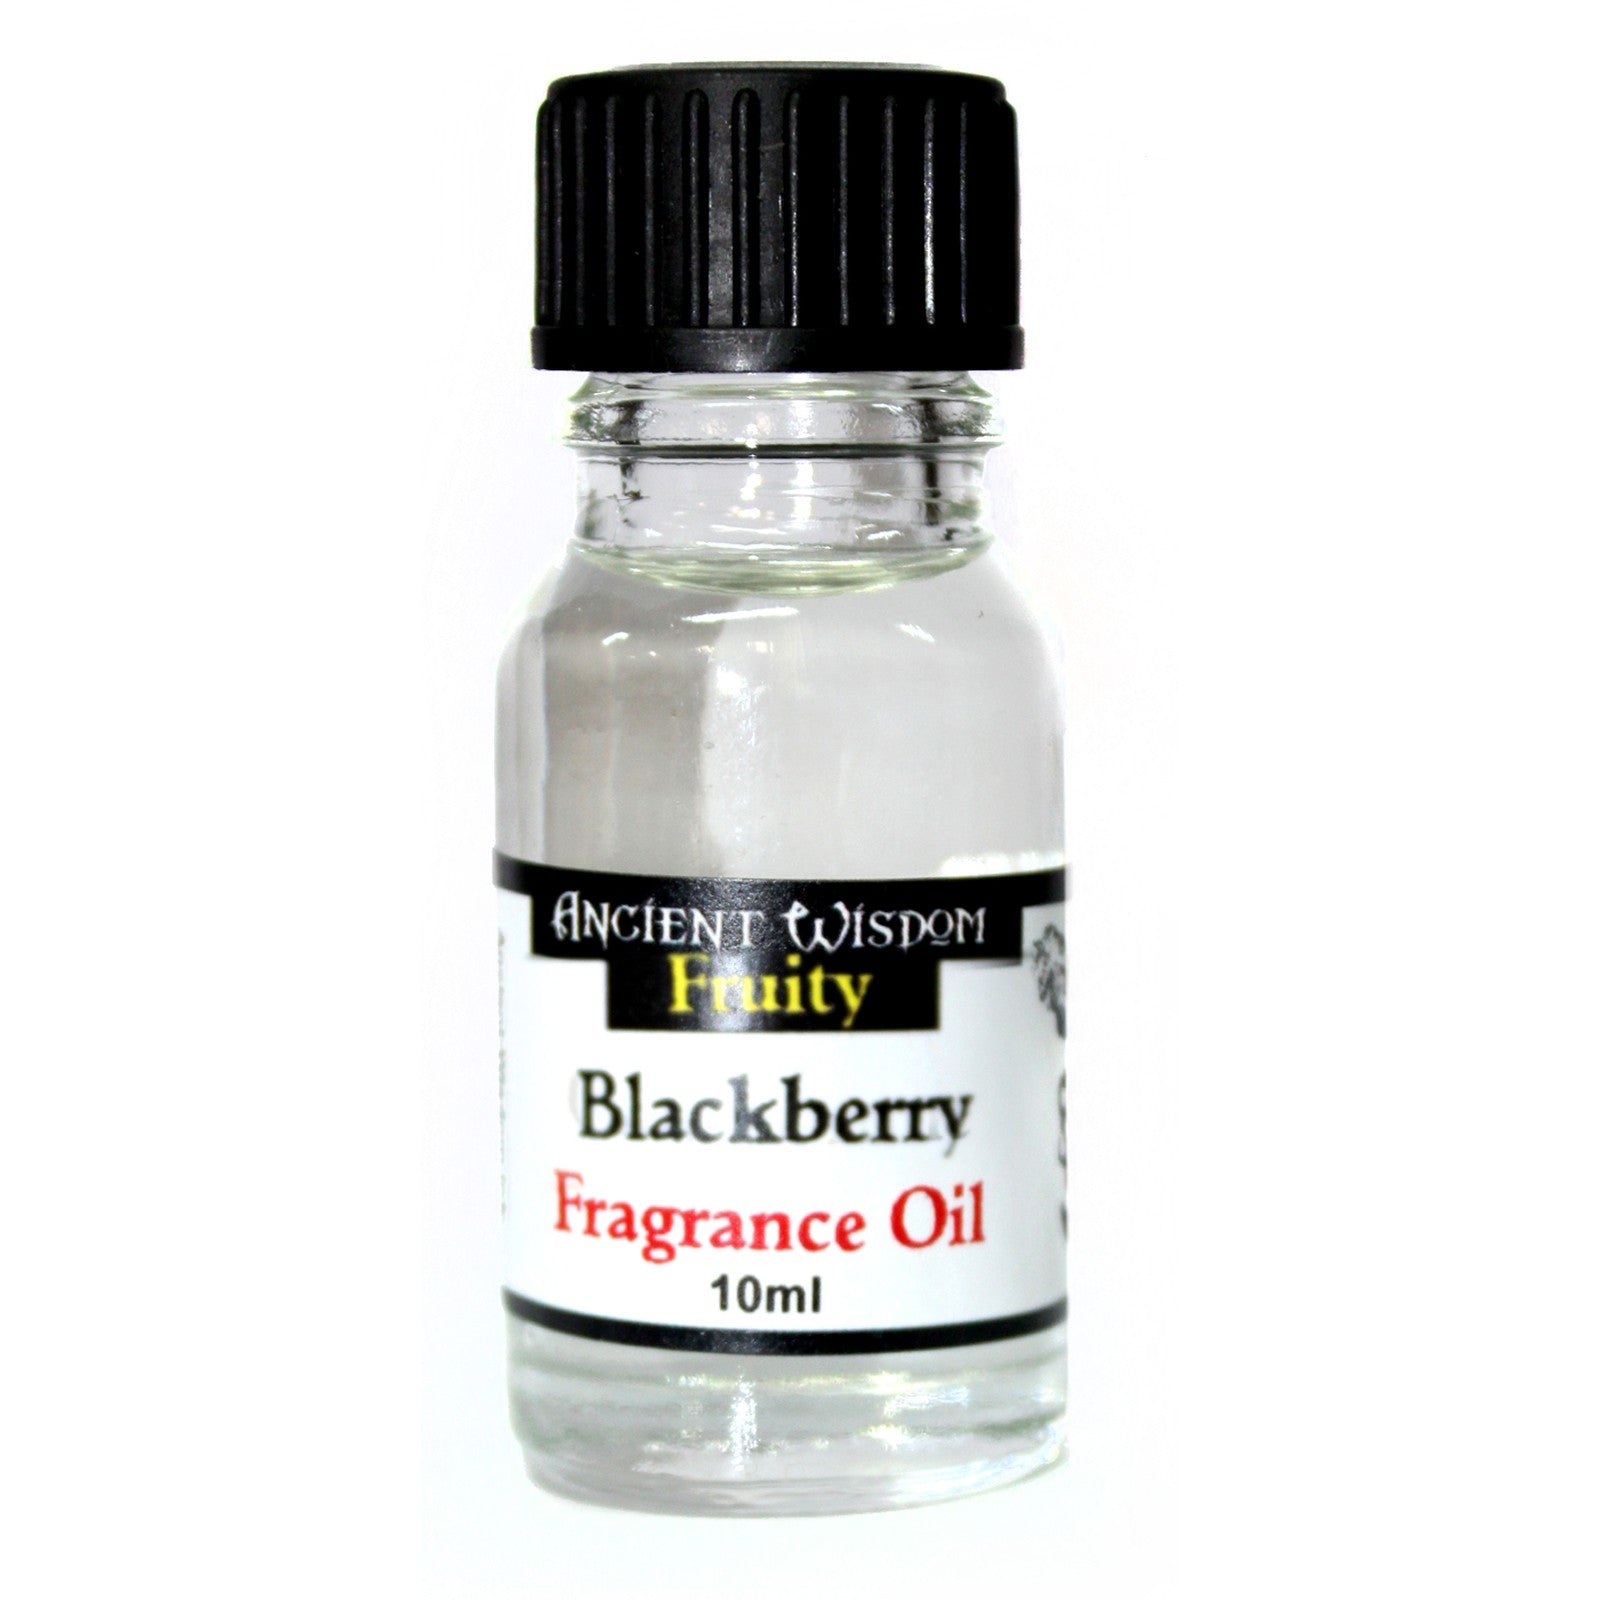 View 10ml Blackberry Fragrance Oil information